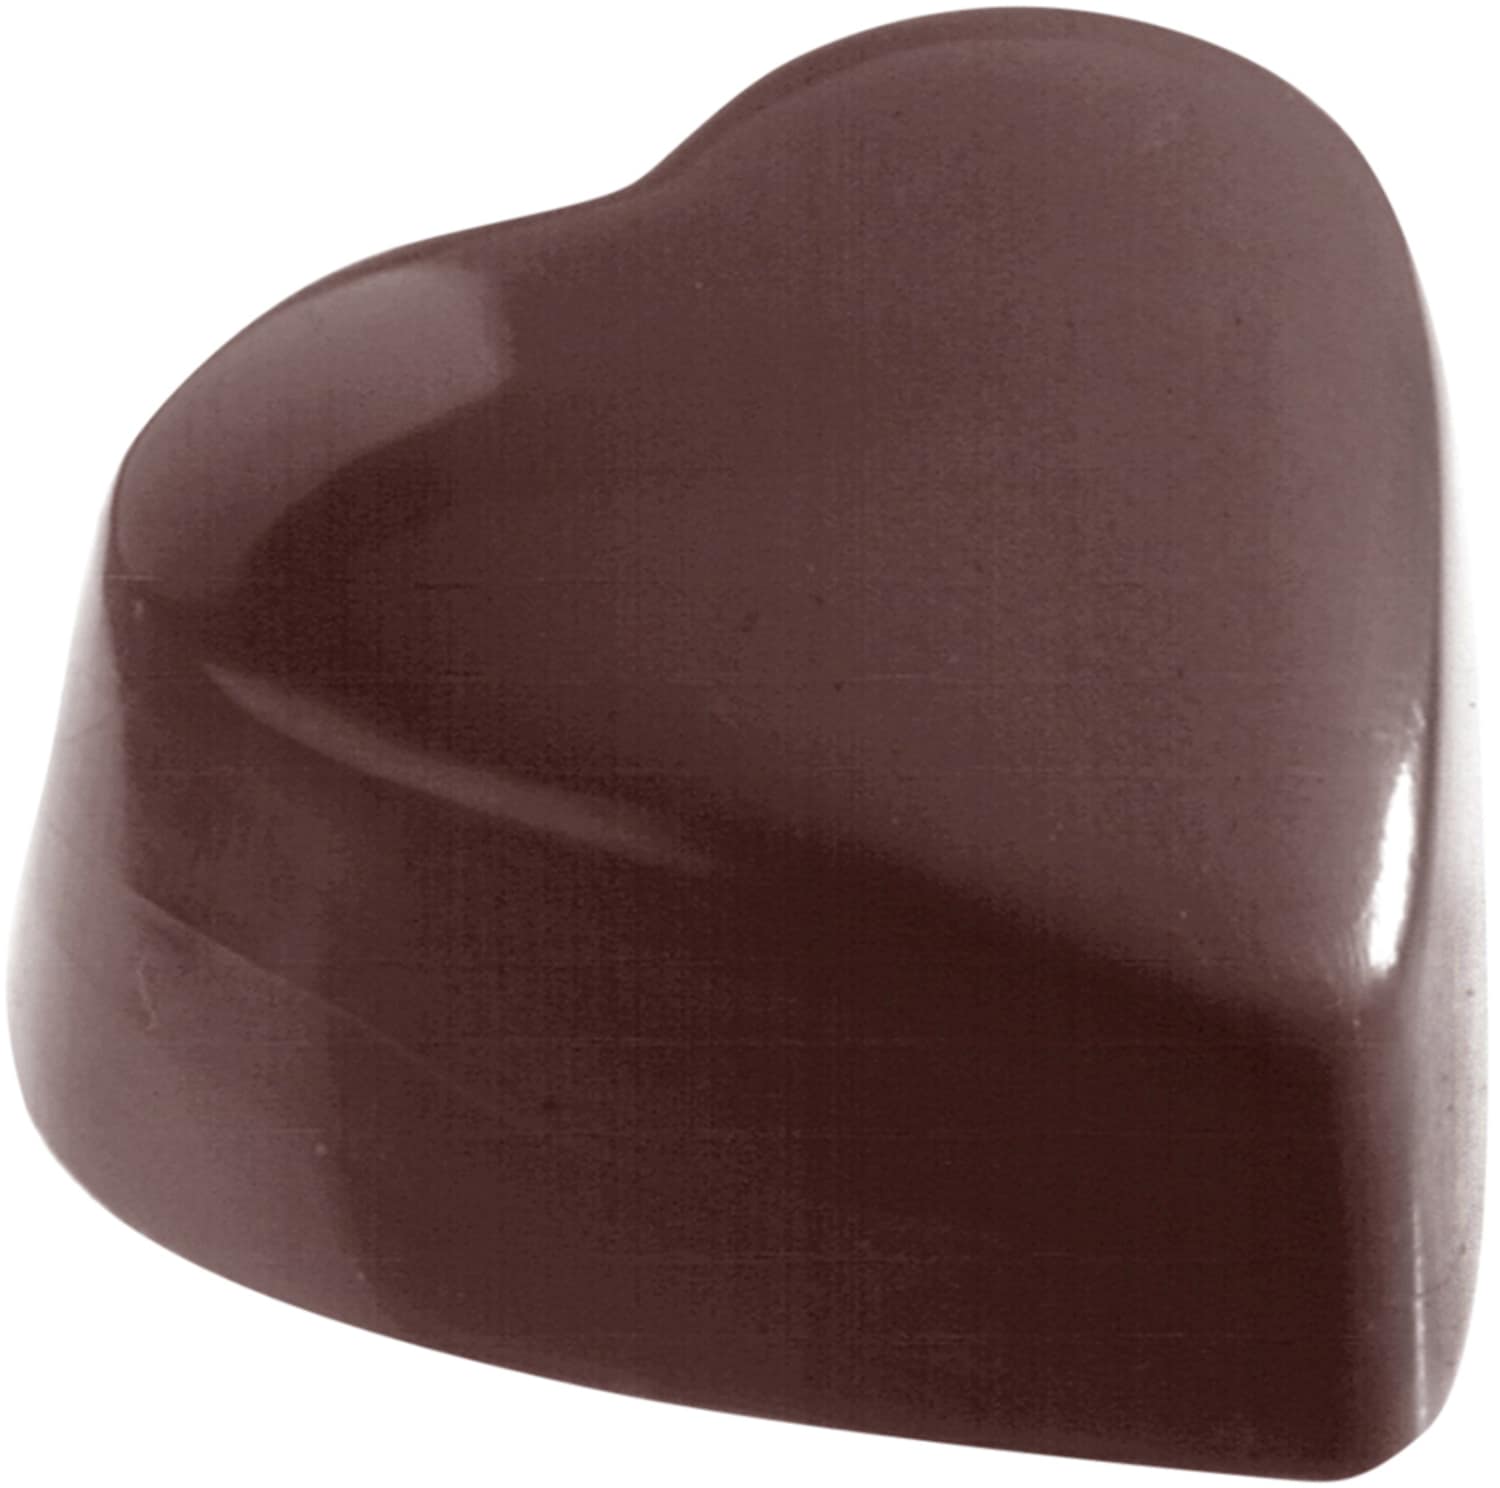 Schokoladenform "Herz" 421214